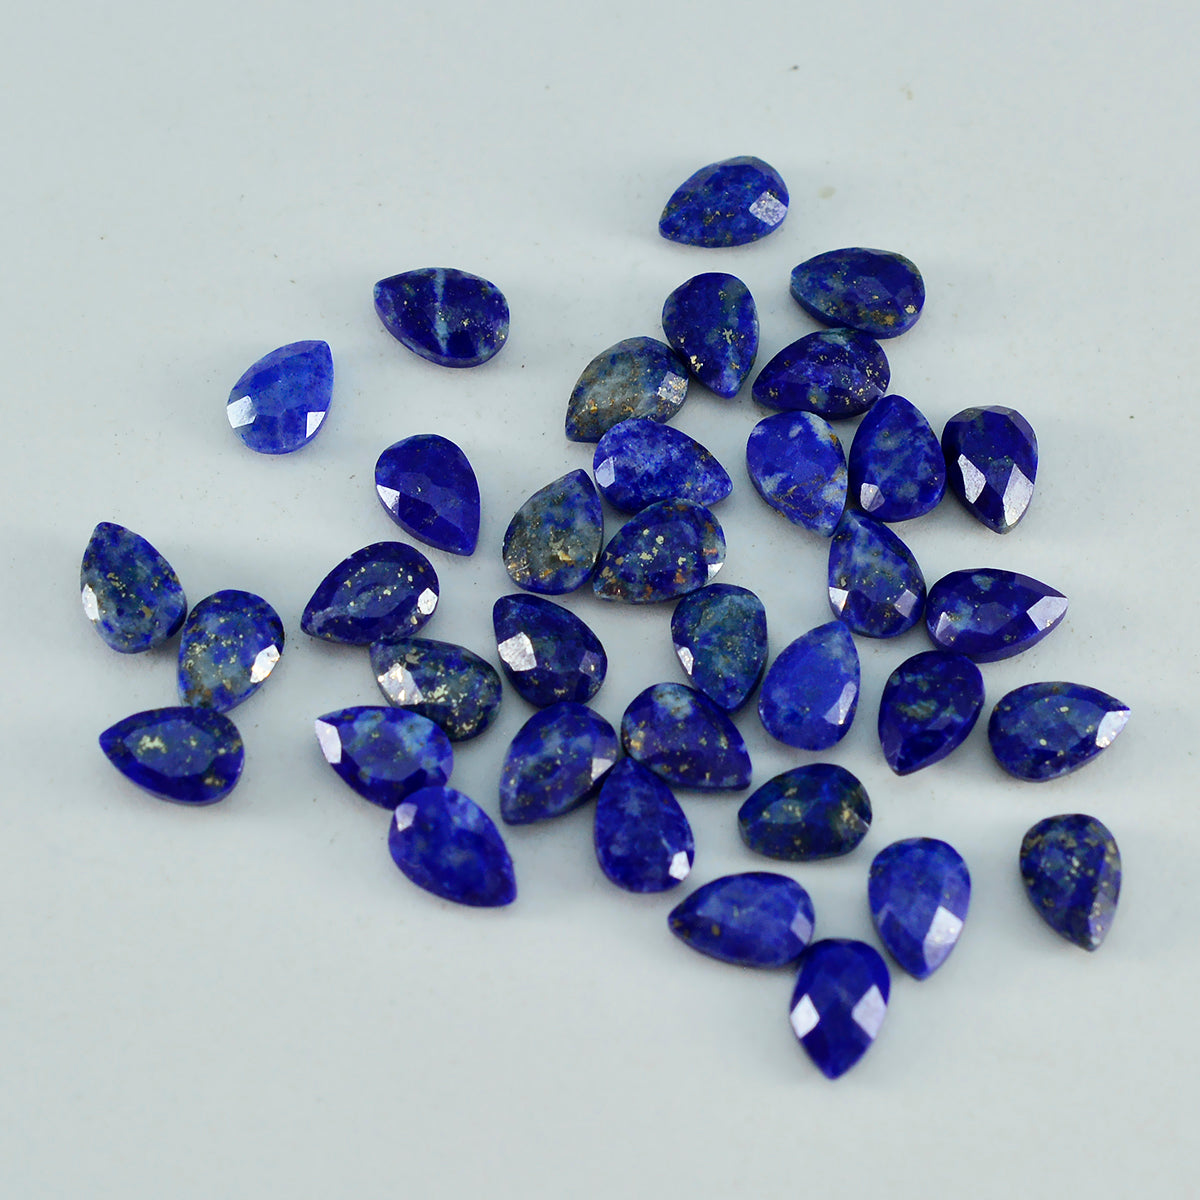 Riyogems 1PC Genuine Blue Lapis Lazuli Faceted 3x5 mm Pear Shape great Quality Gems